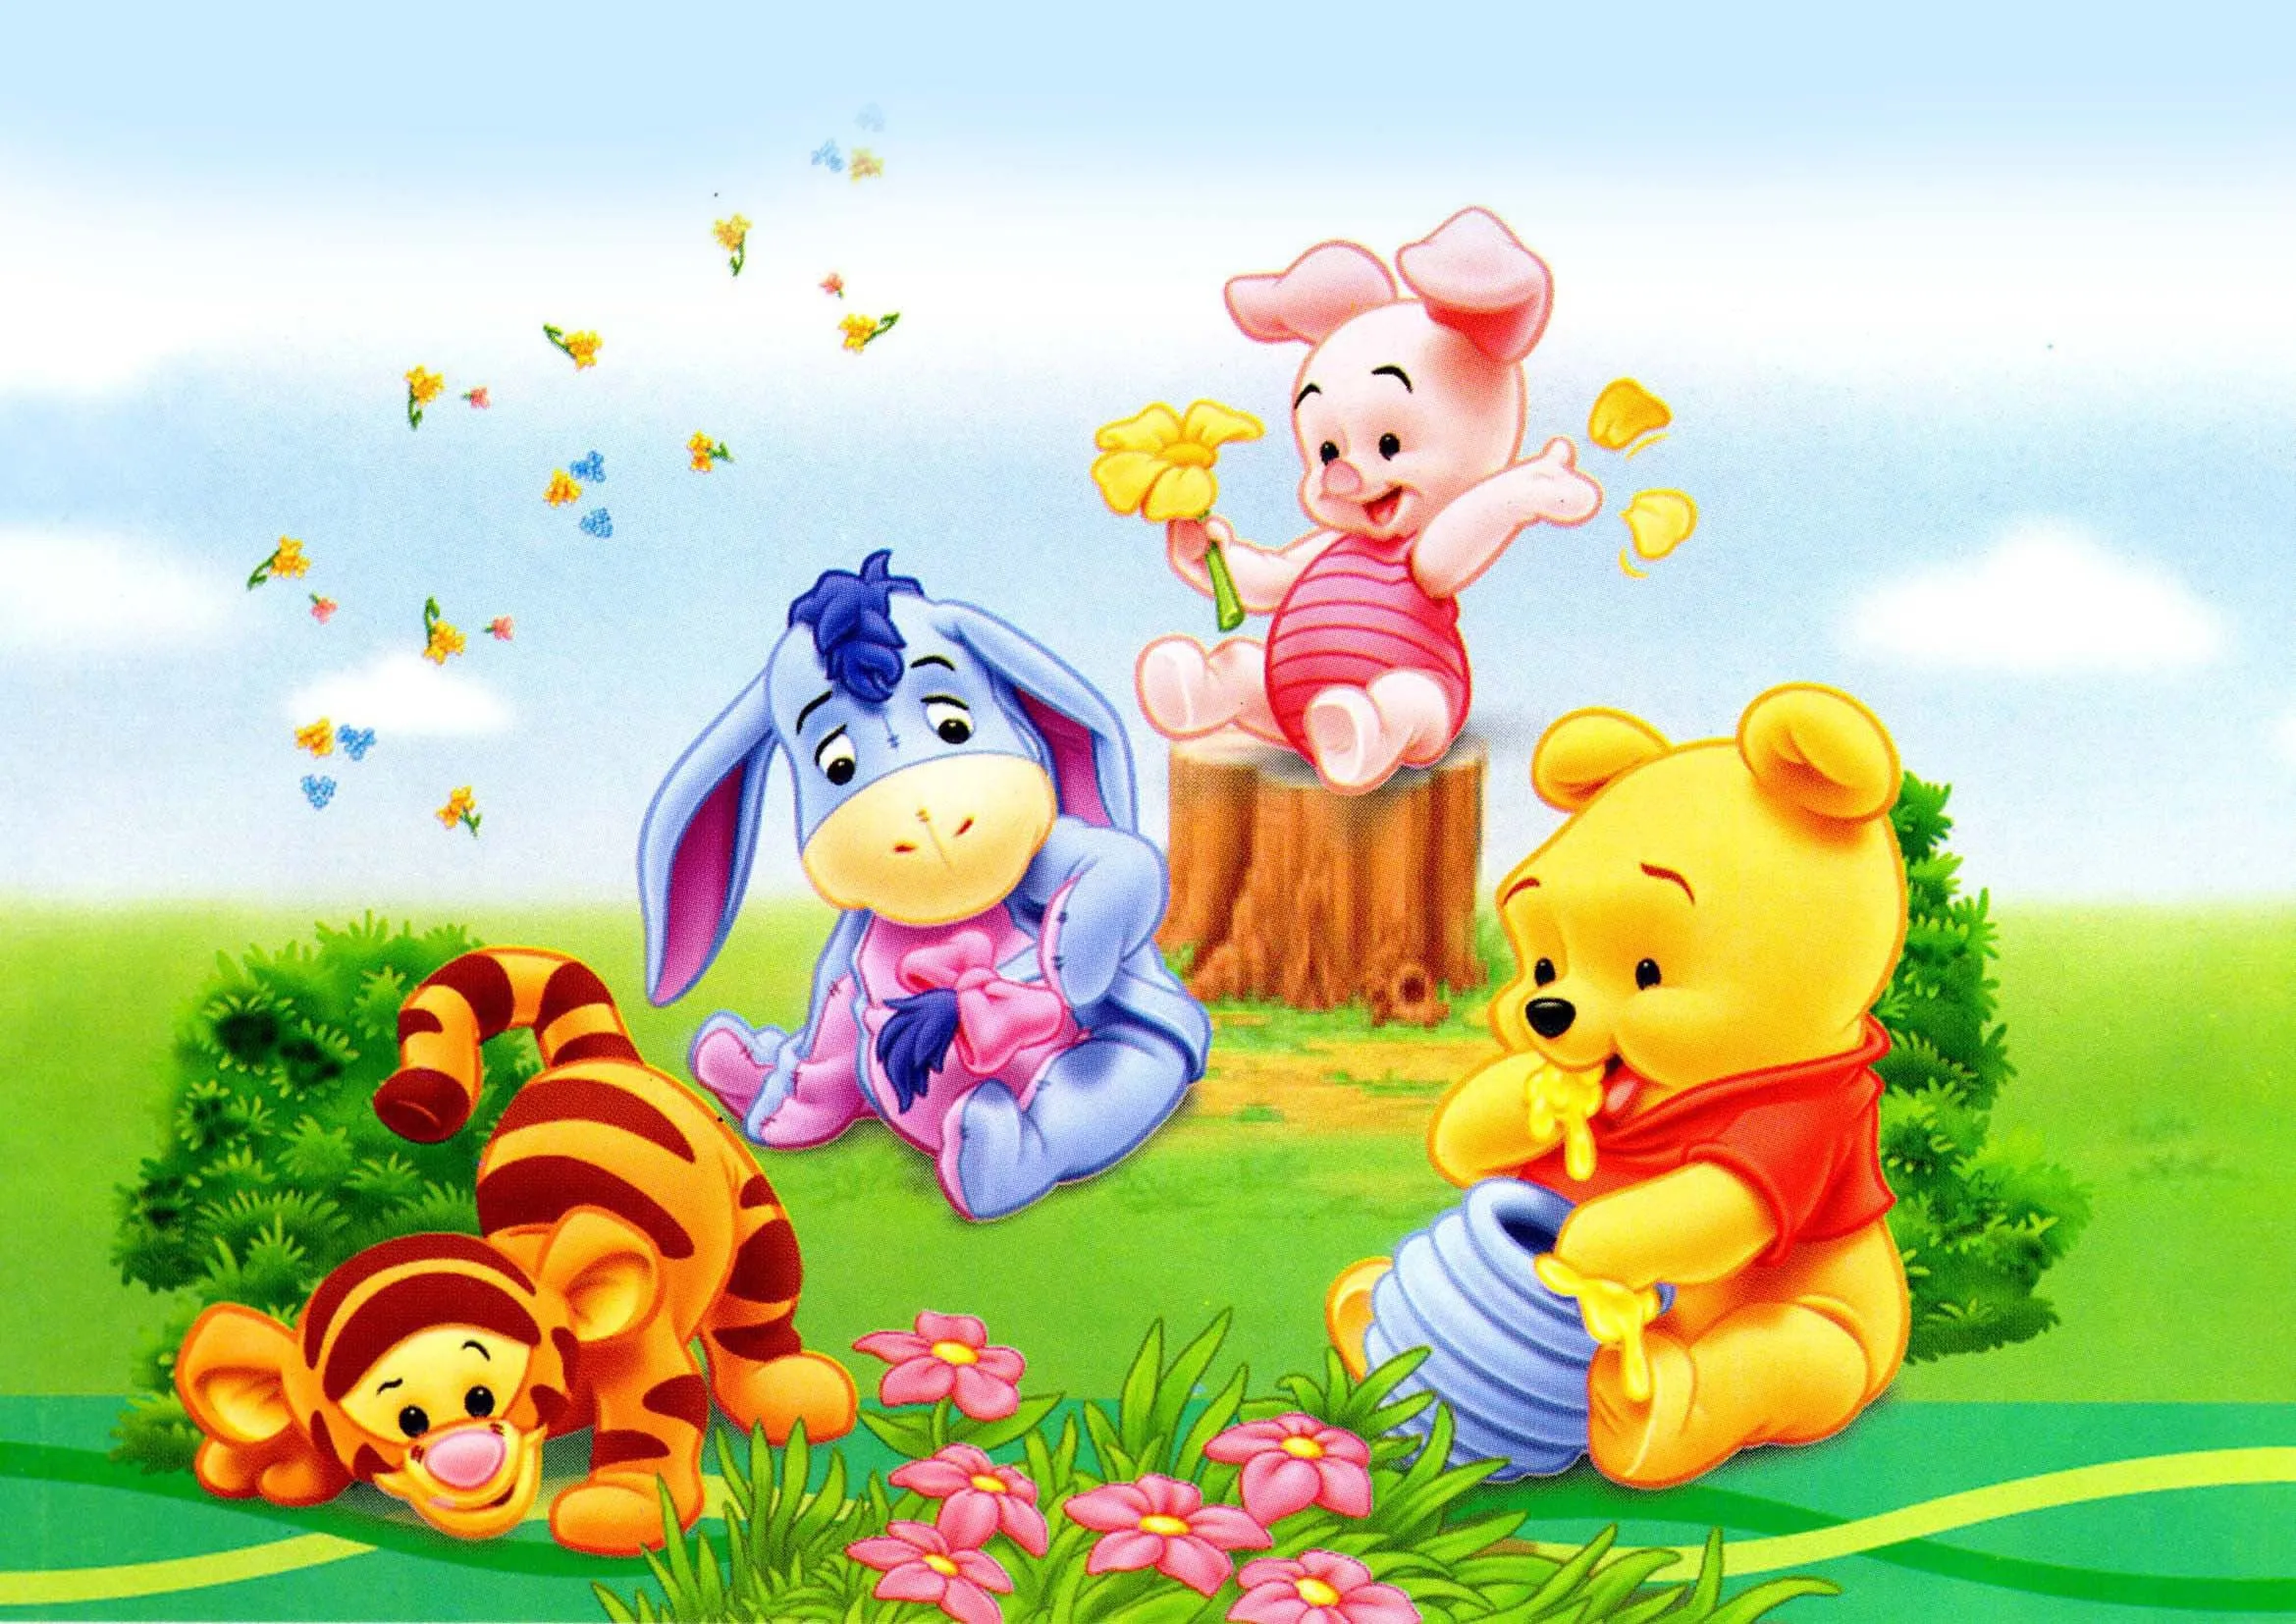 Baby pooh wallpaper - Baby Pooh Photo (30438314) - Fanpop